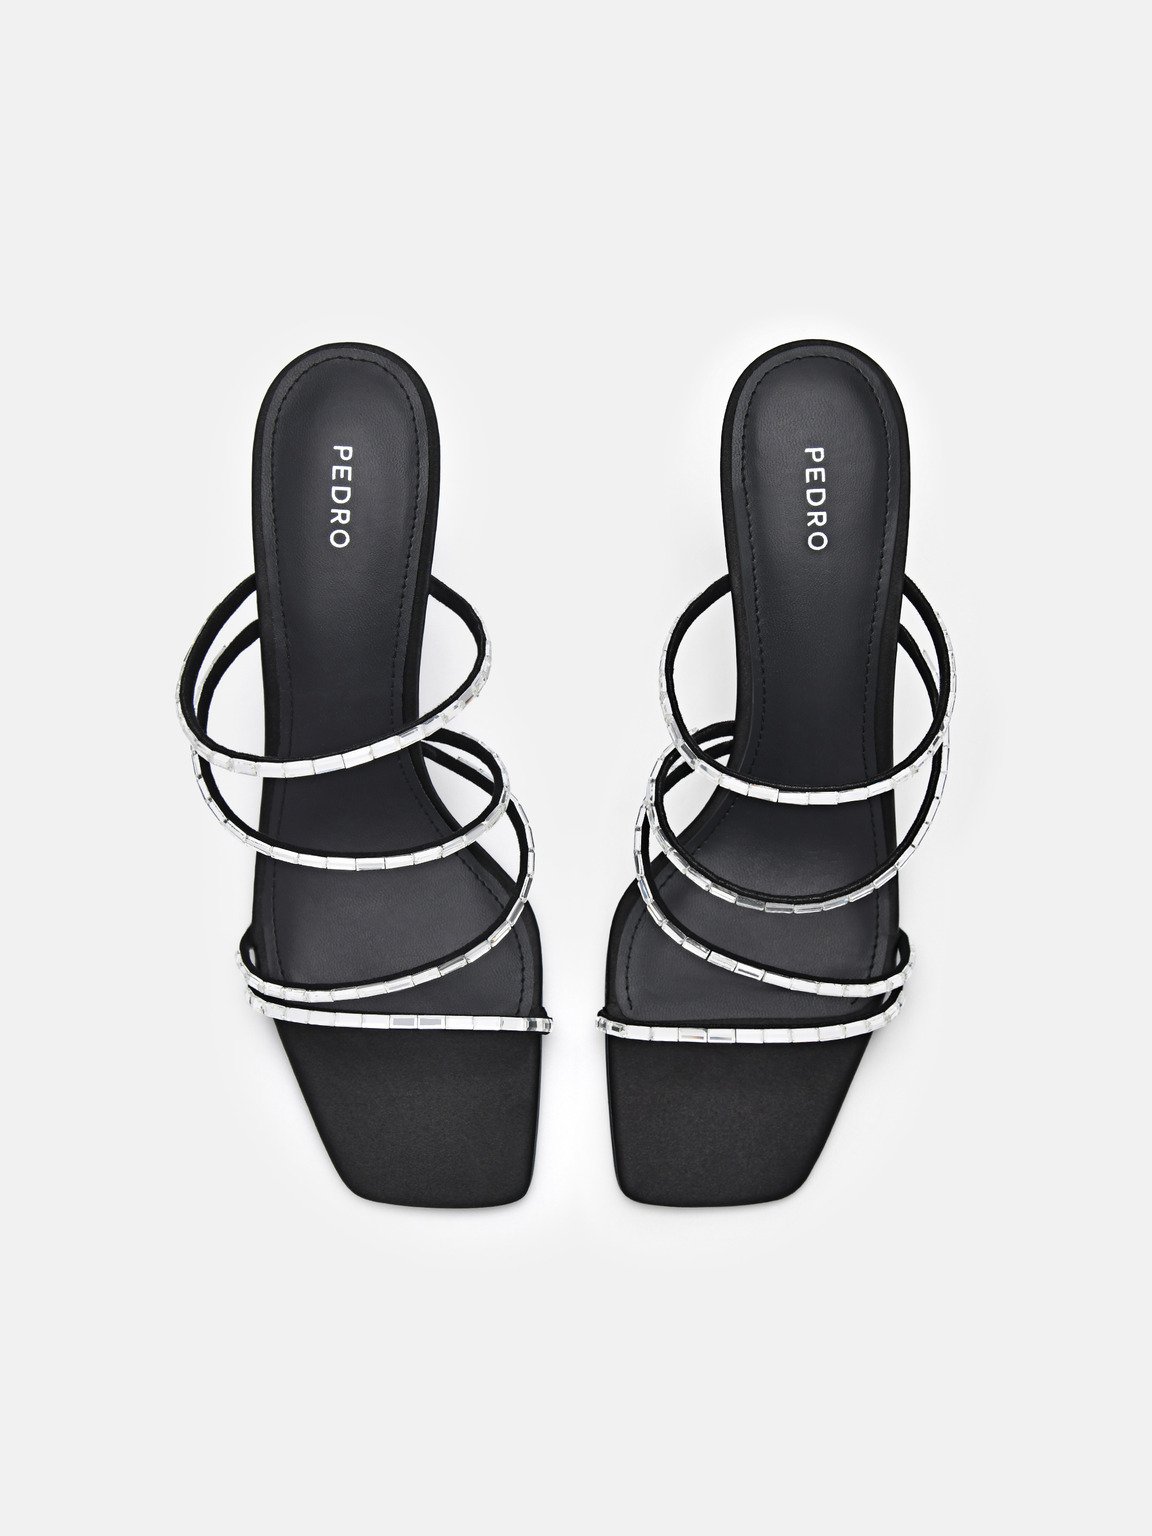 Savannah Heel Sandals, Black